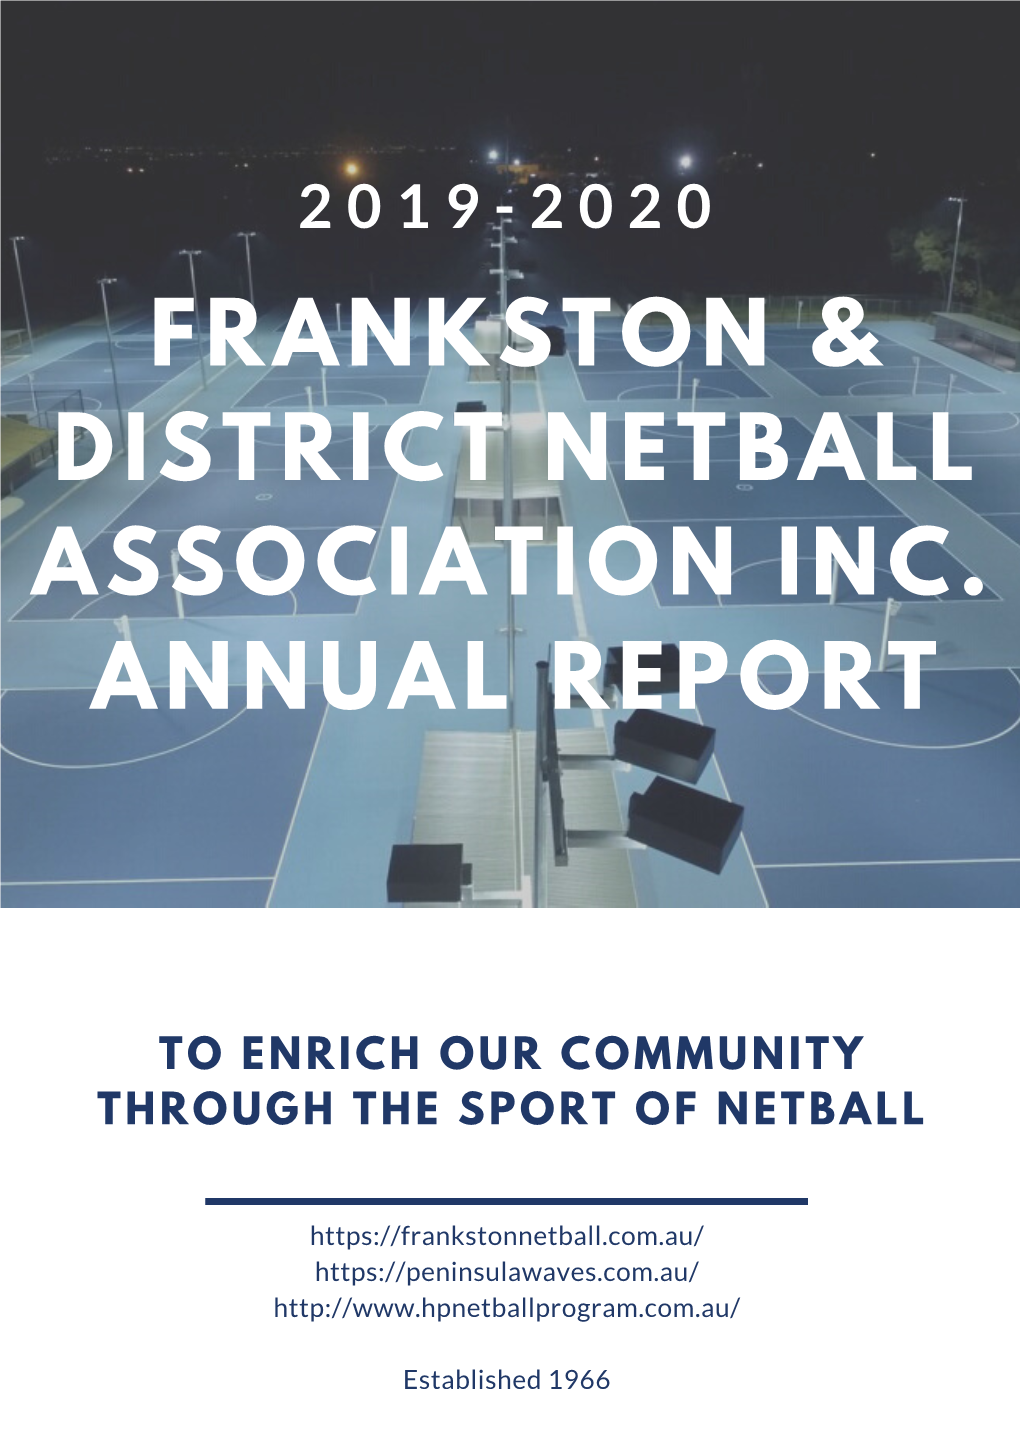 Frankston & District Netball Association Inc. Annual